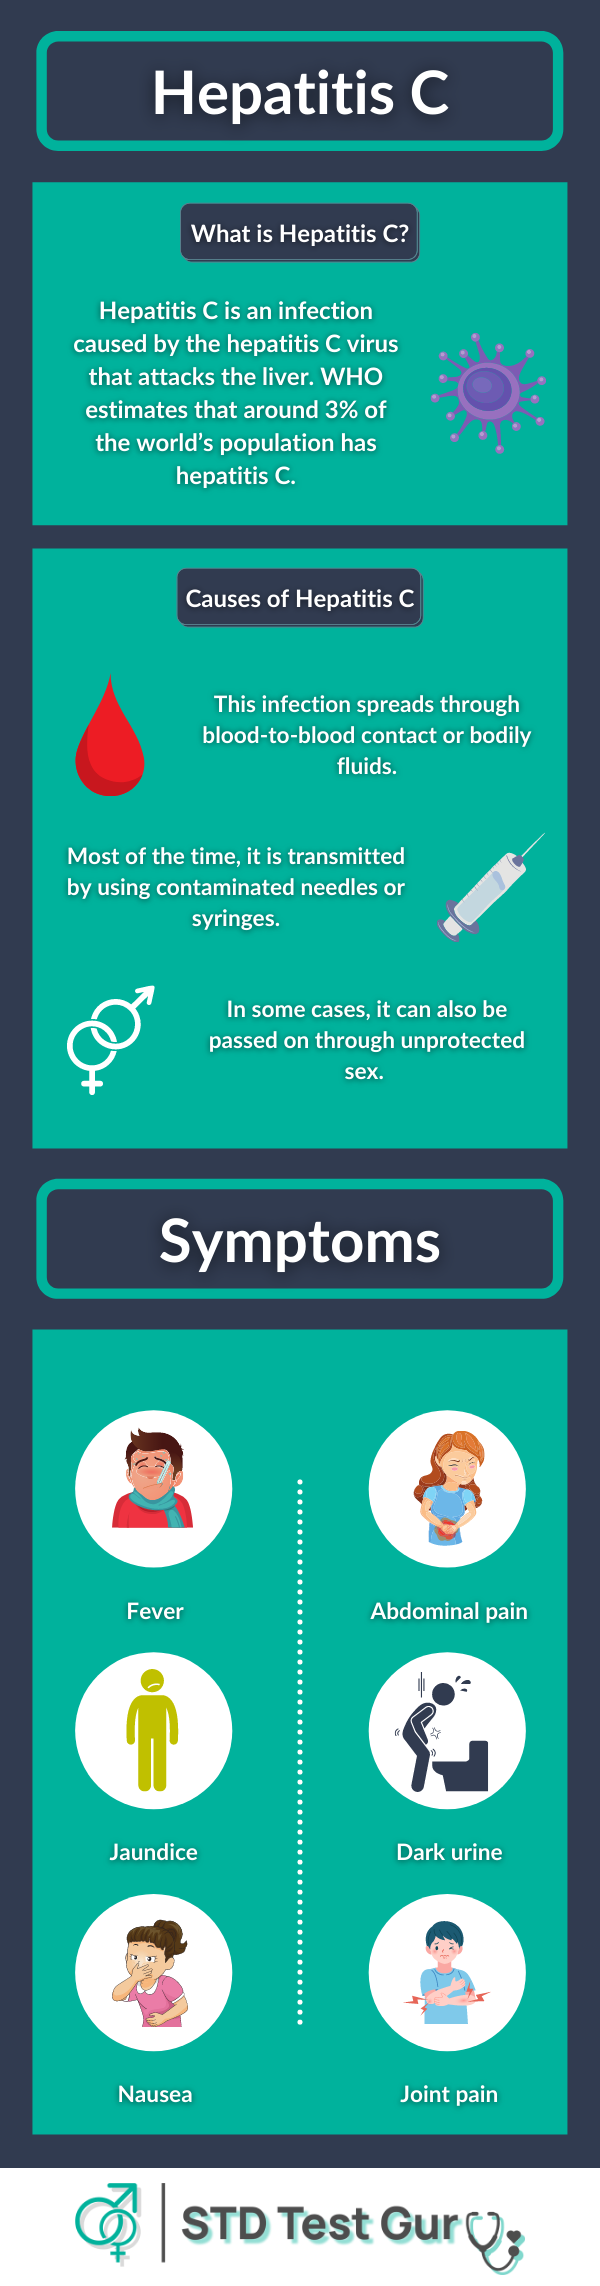 Hepatitis C: Causes and Symptoms